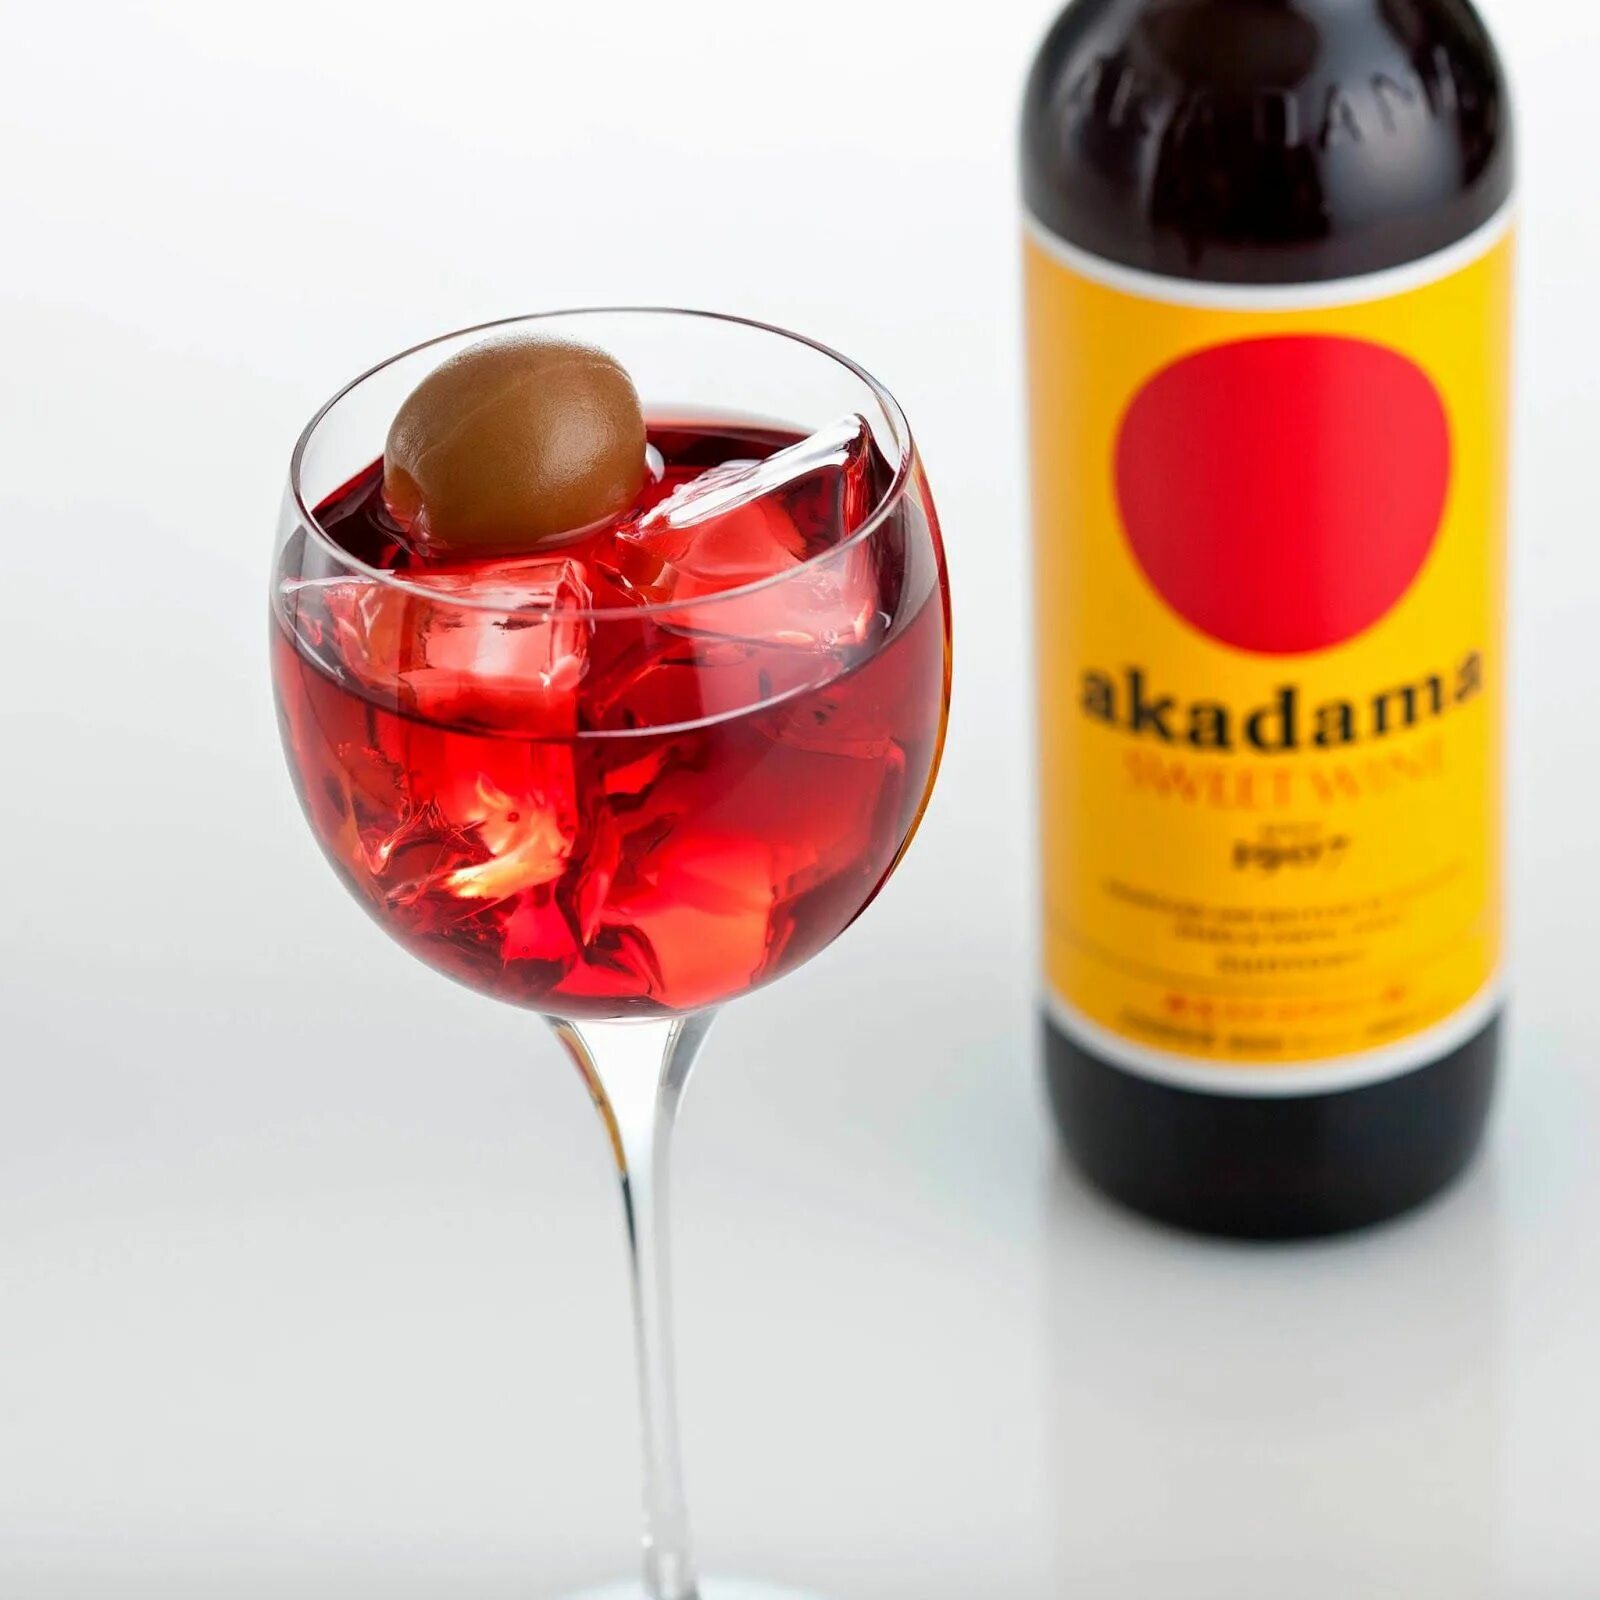 Акадама вино. Akadama вино Япония. Японское вино Сантори. Сантори вино Акадама. Японский vin